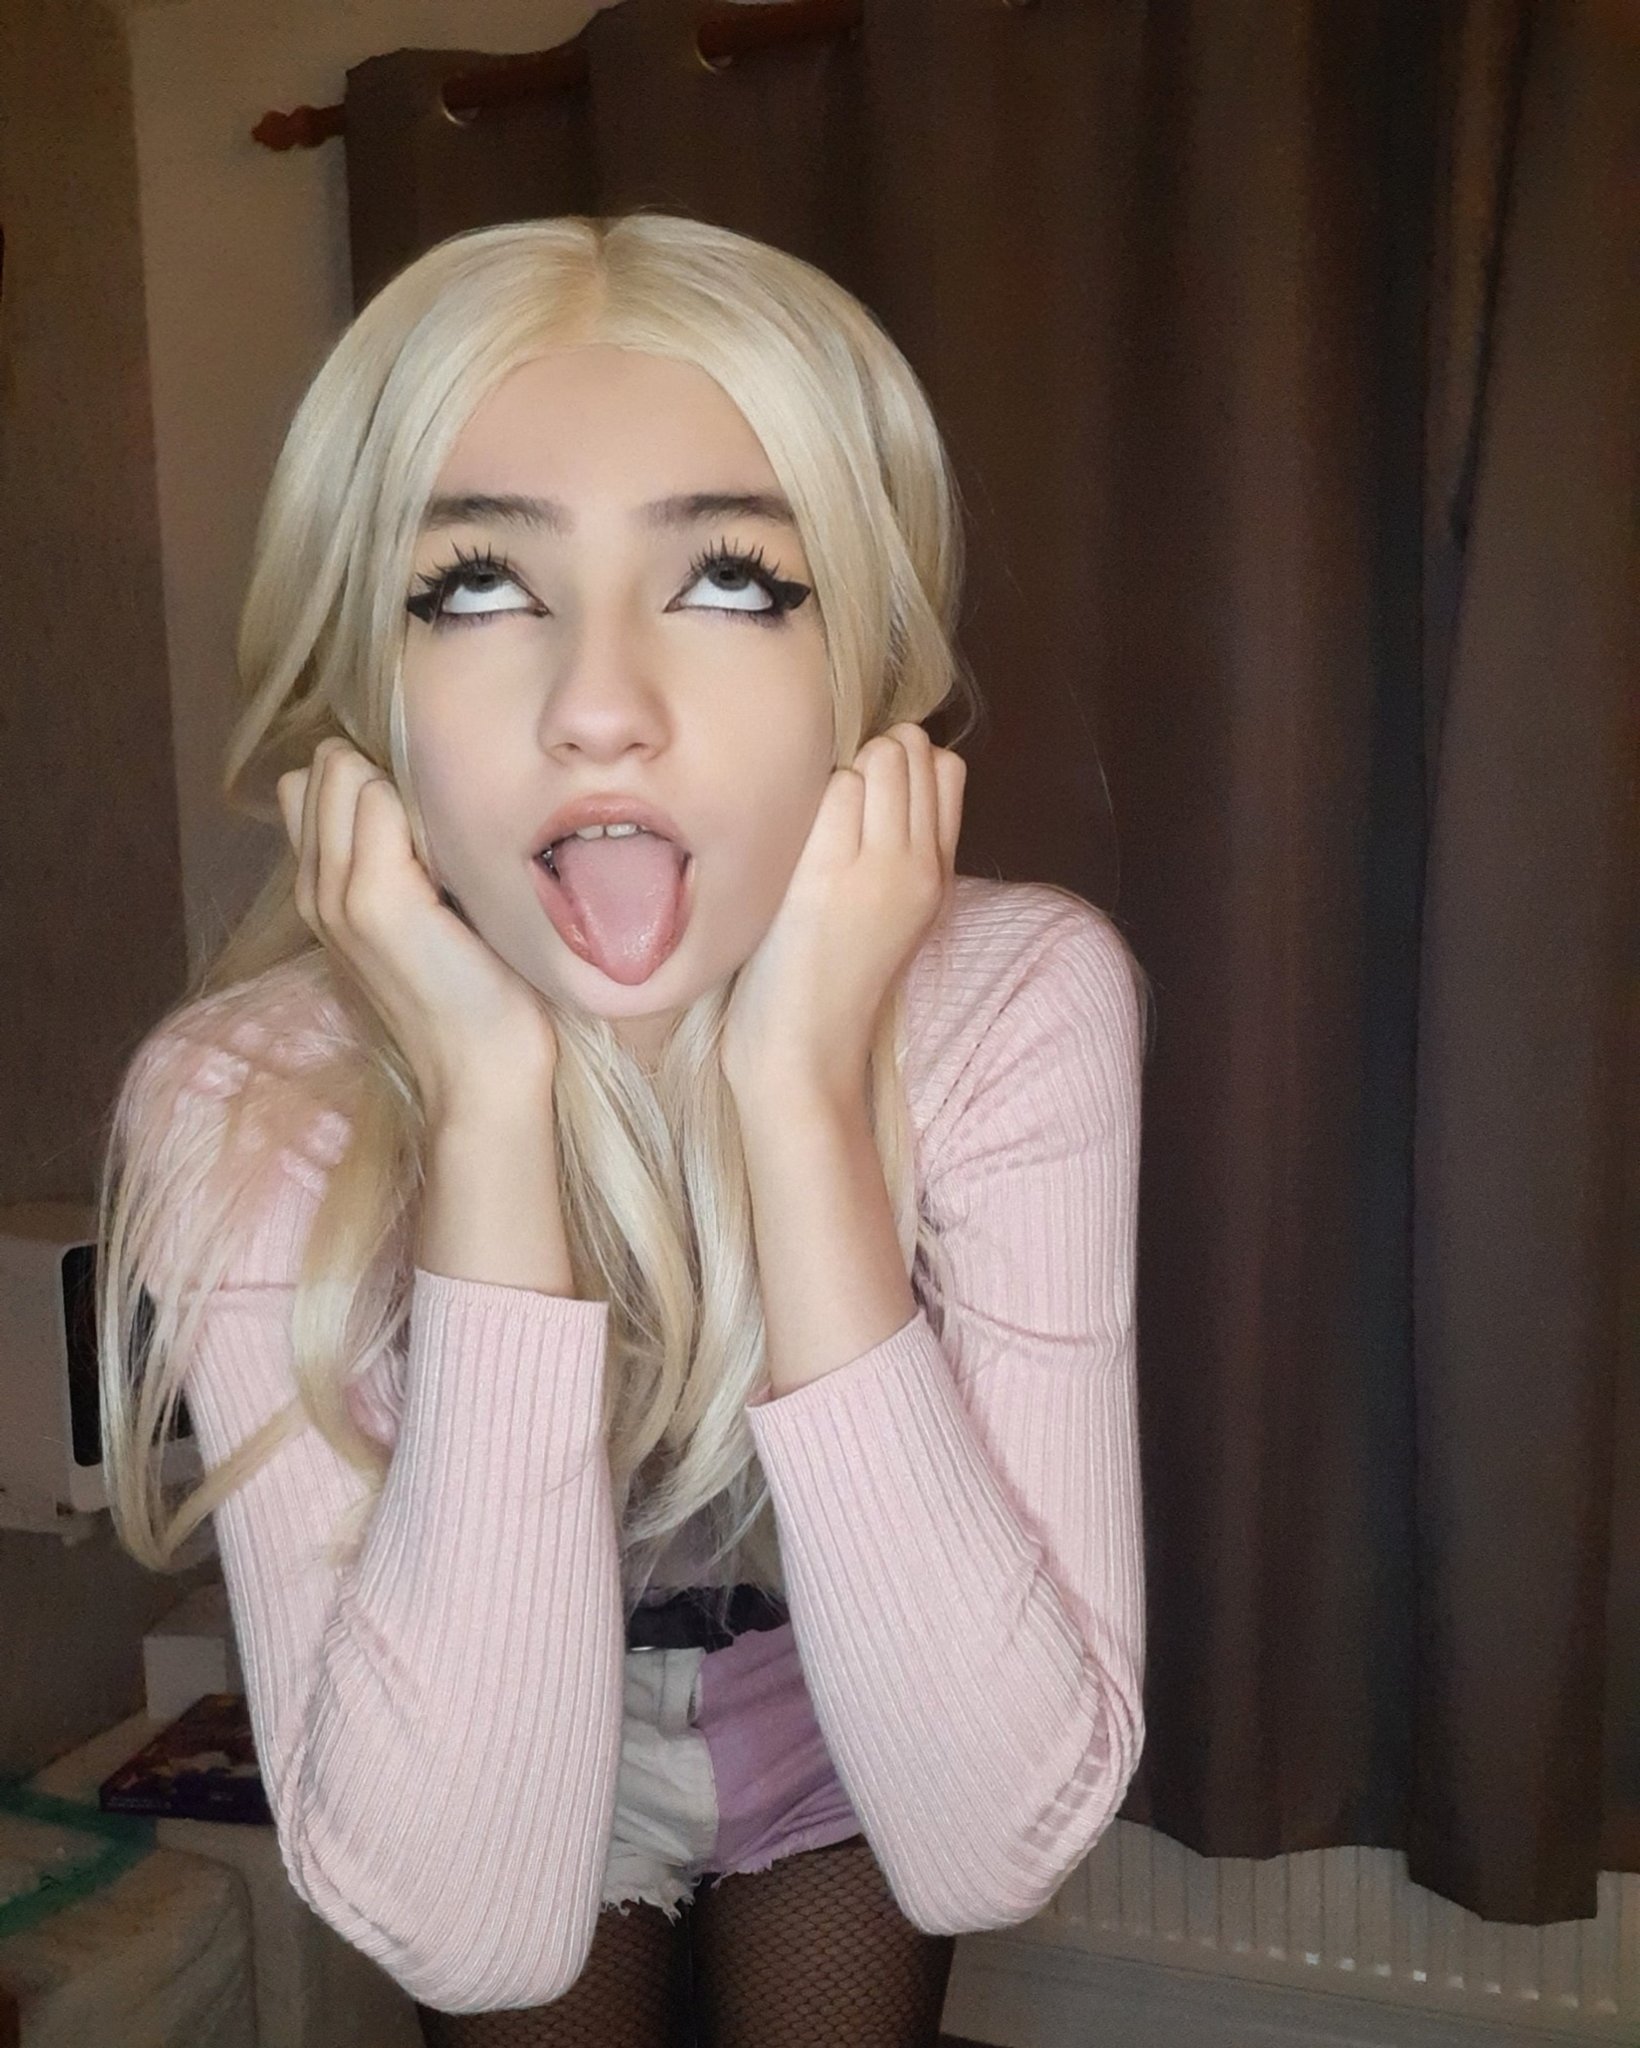 Anita Riley on X: Cum face ;3 t.co2nmgTXwENZ #nsfwtwt #egirl  #fansly #teenmodel #cute #altgirl #selfie #cutegirl #modeling #onlyfansgirl  #onlyfans #kawaii #sexy #anime #cosplaygirl #plushie #altmodel  #onlyfansgirls #petite #altfashion ...